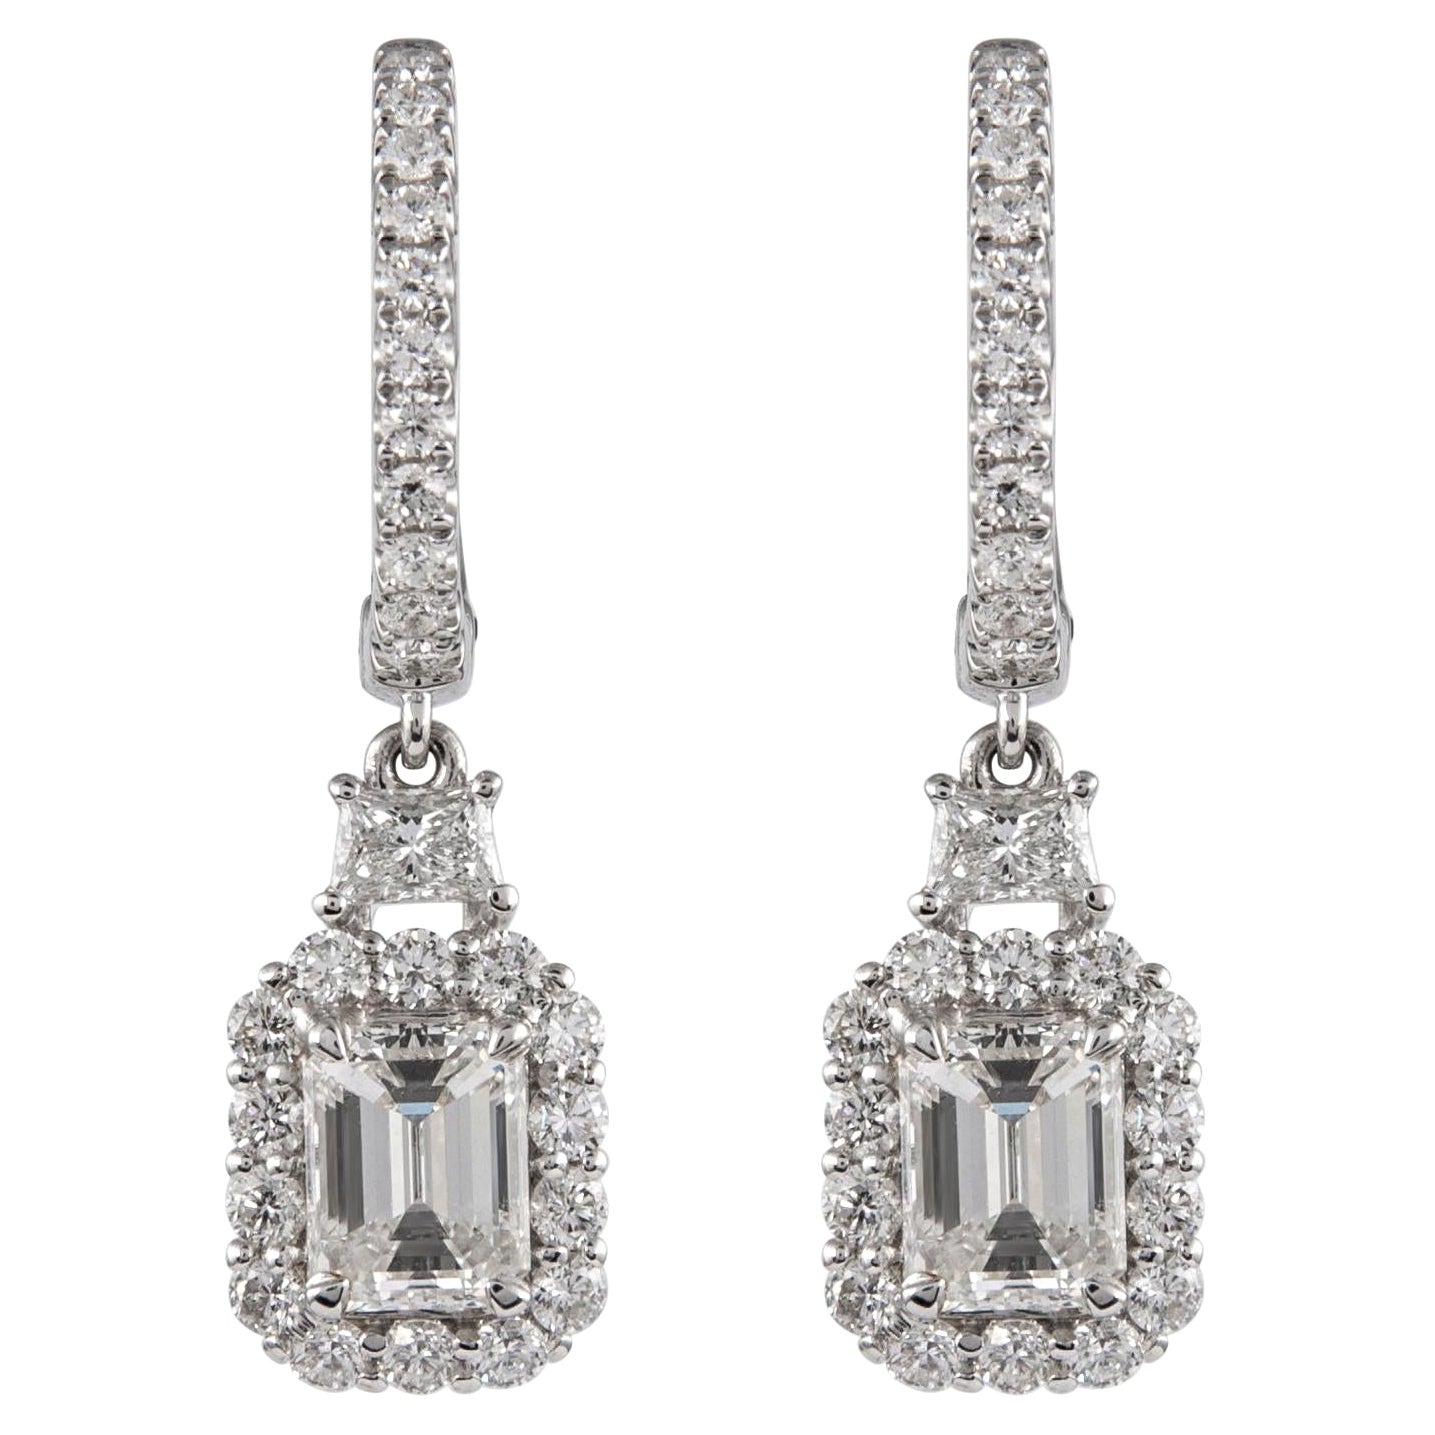 GIA Certified 2.37ct Emerald Cut Diamond Drop Earrings with Halo 18k White Gold